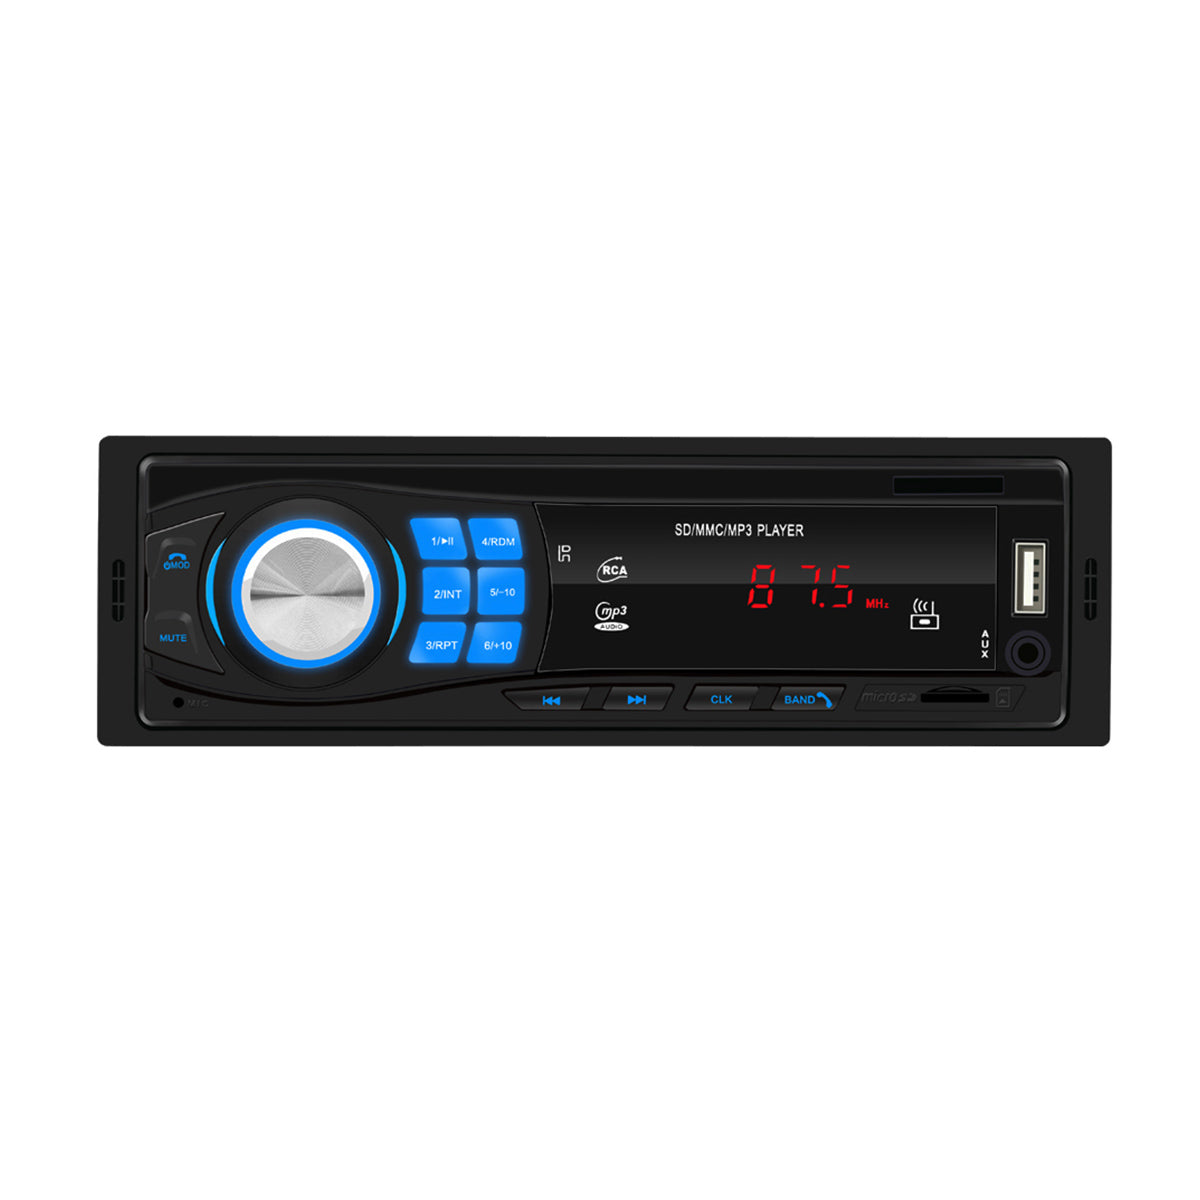 Black 8013 Car Radio Stereo Audio Receiver Auto MP3 Player bluetooth Hands-free AUX FM SD TF USB 12V